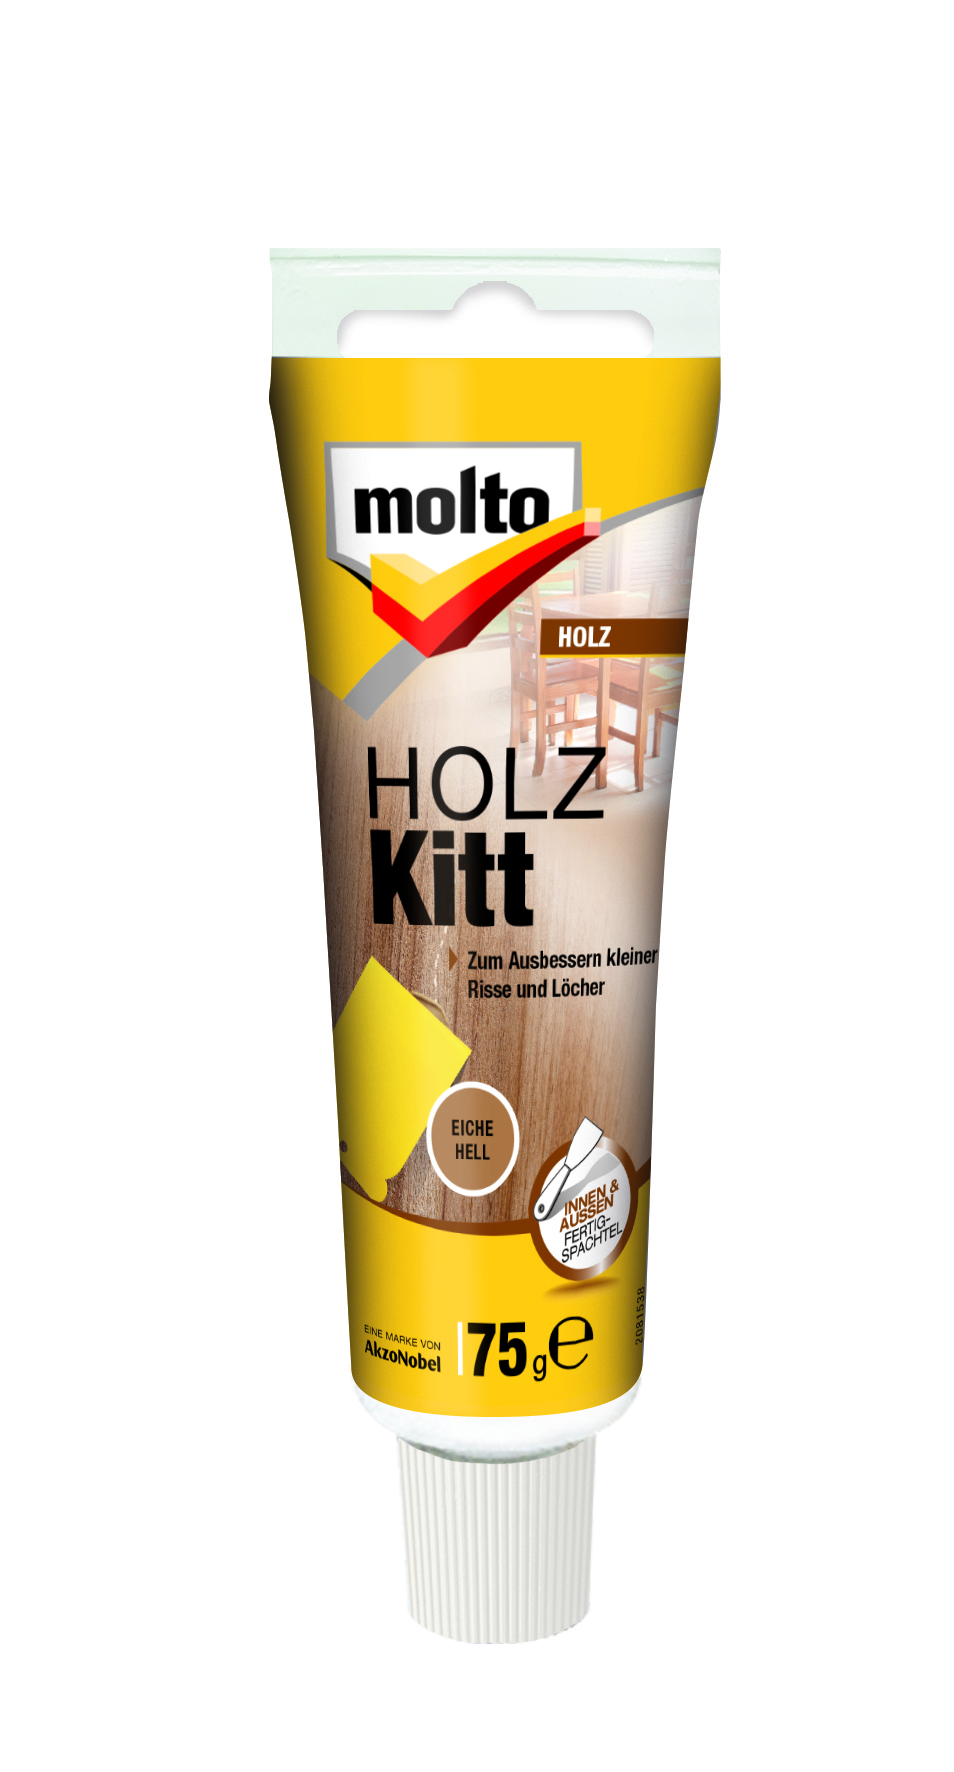 MOLTO HOLZ-KITT EICHE HELL 75 G